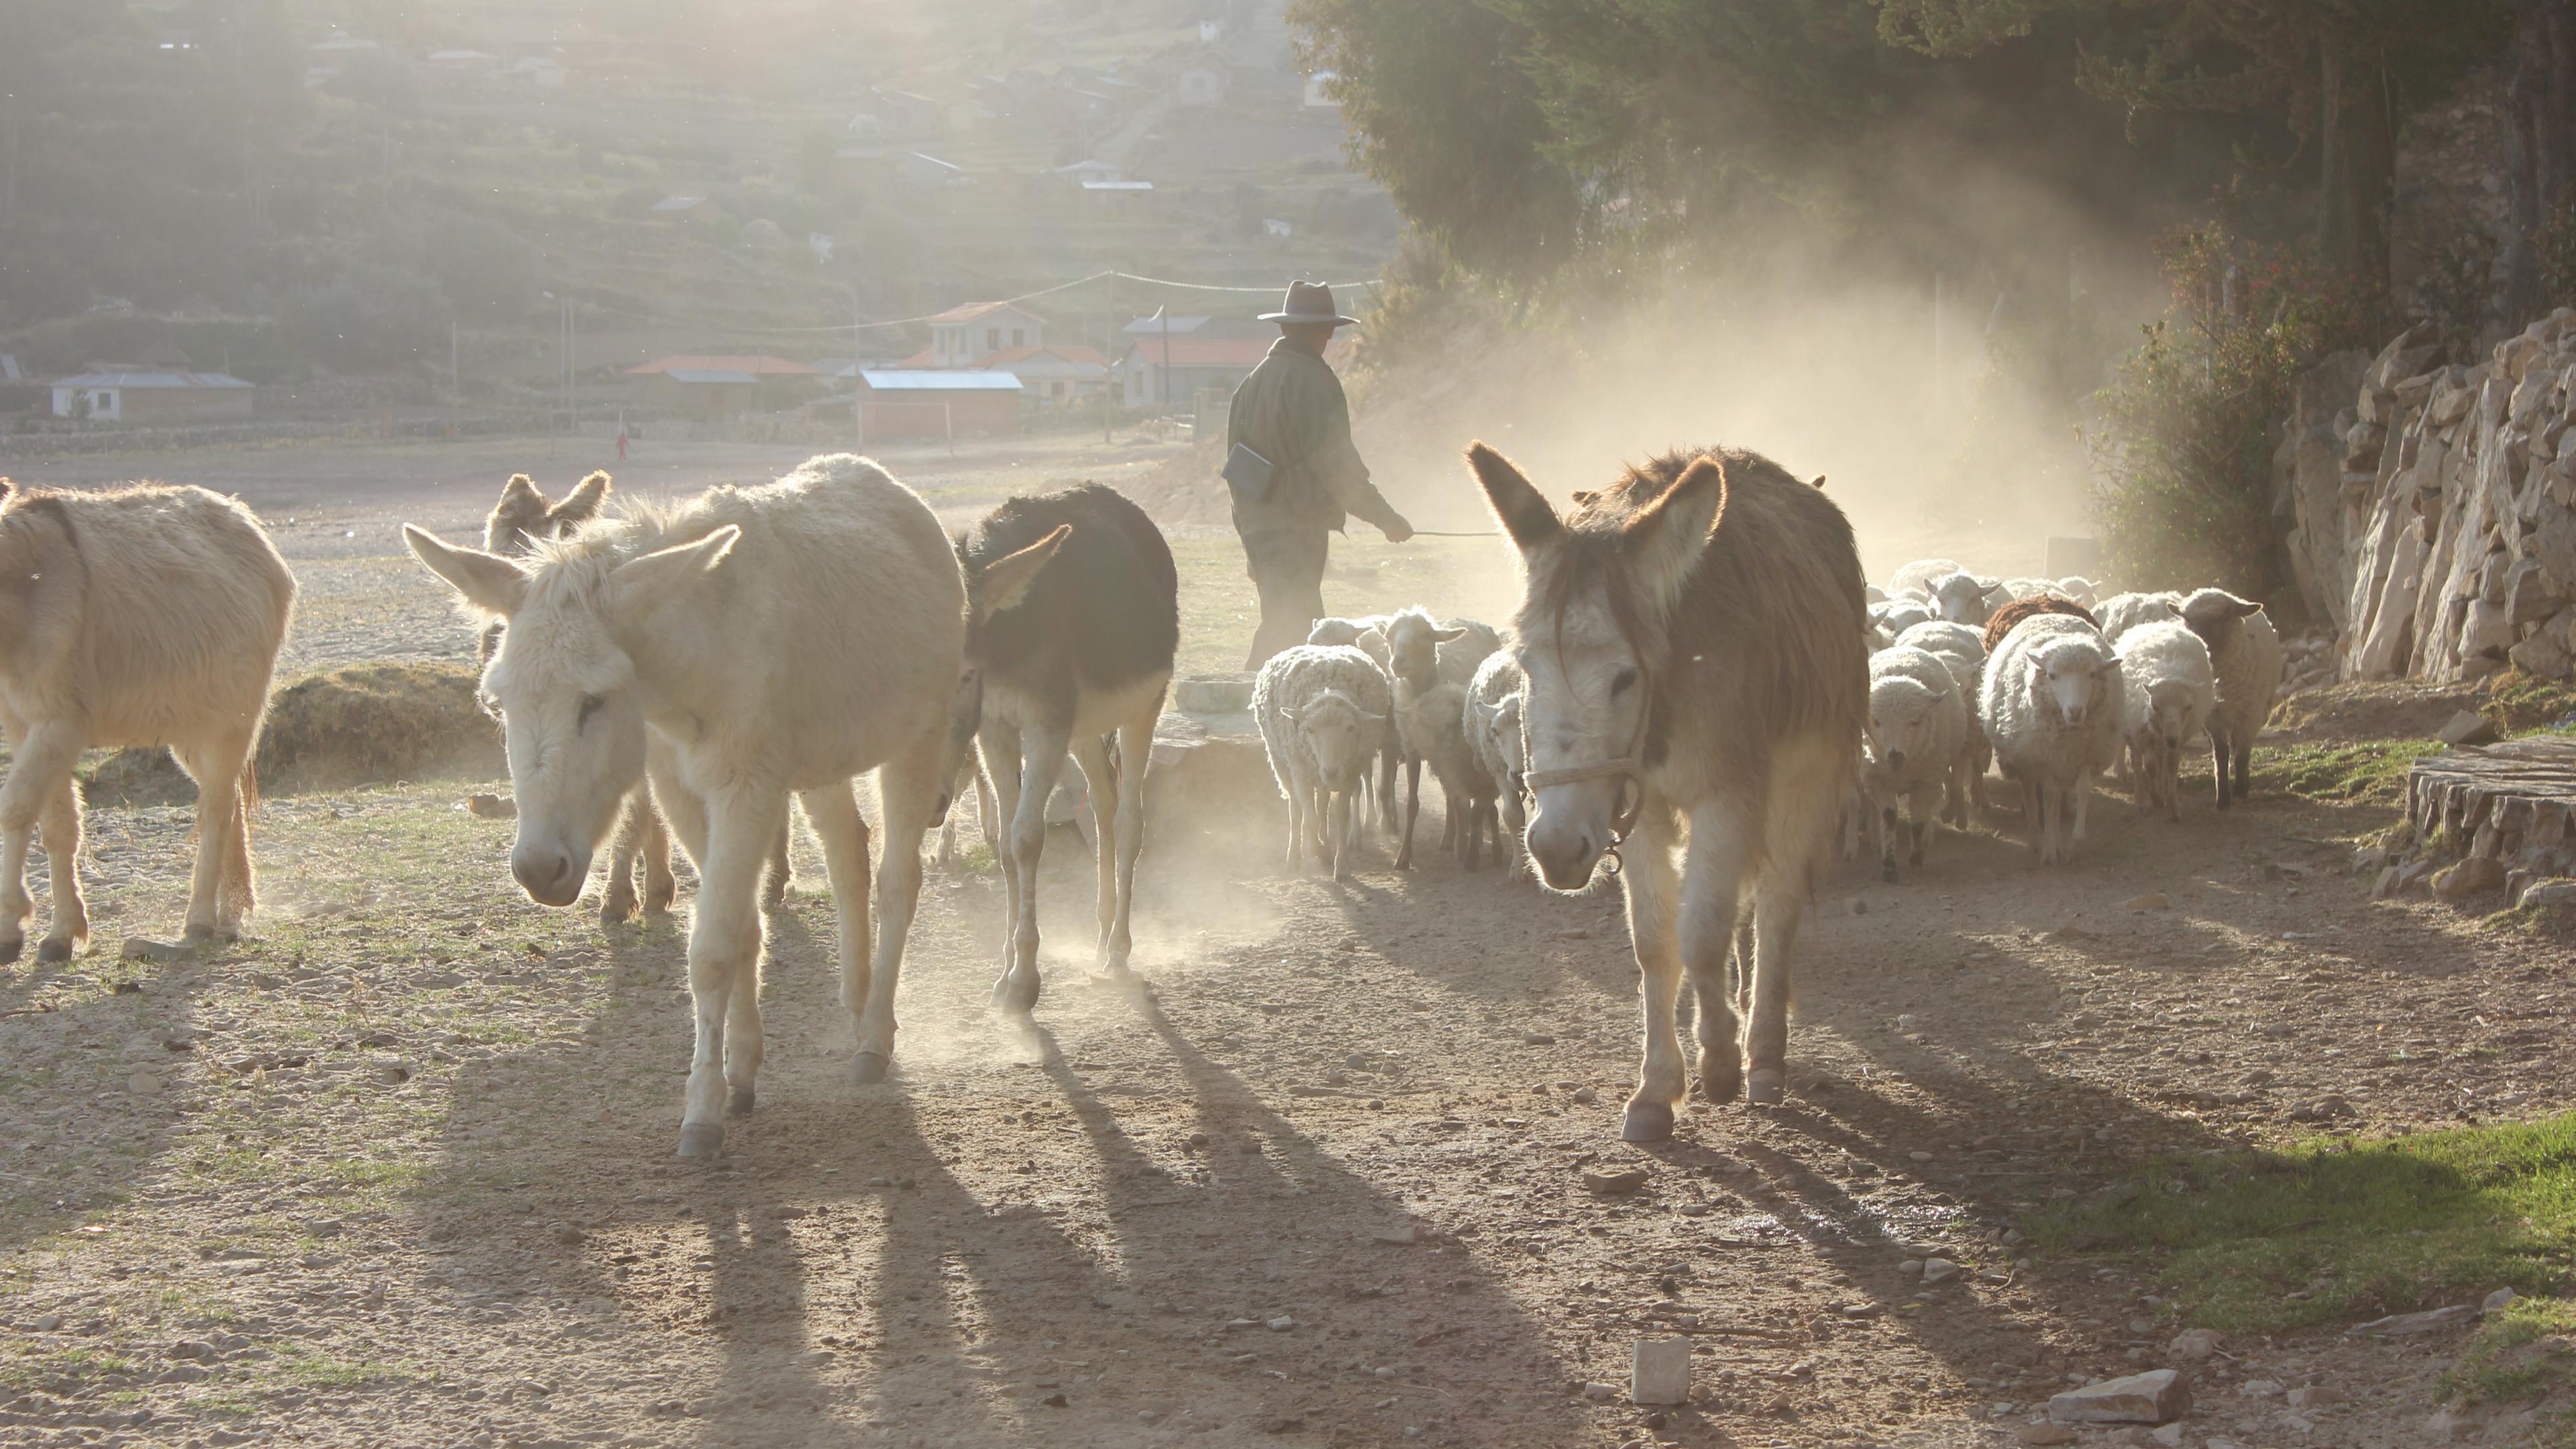 Donkeys walk on a dusty path in the morning sun